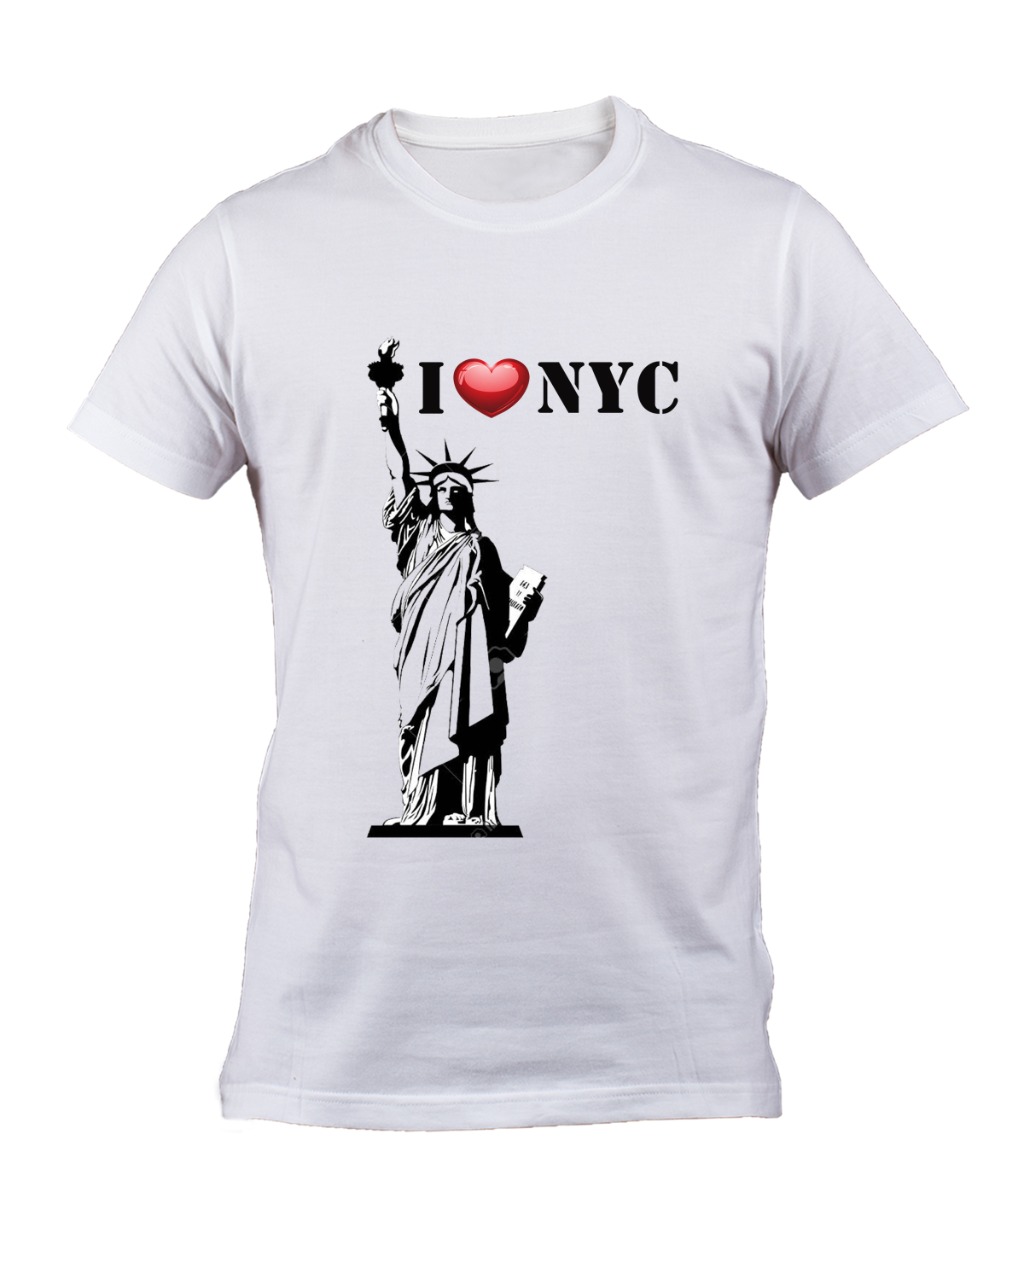 I SHIRT- – LOVE casualteeshirts WHITE NYC TEE